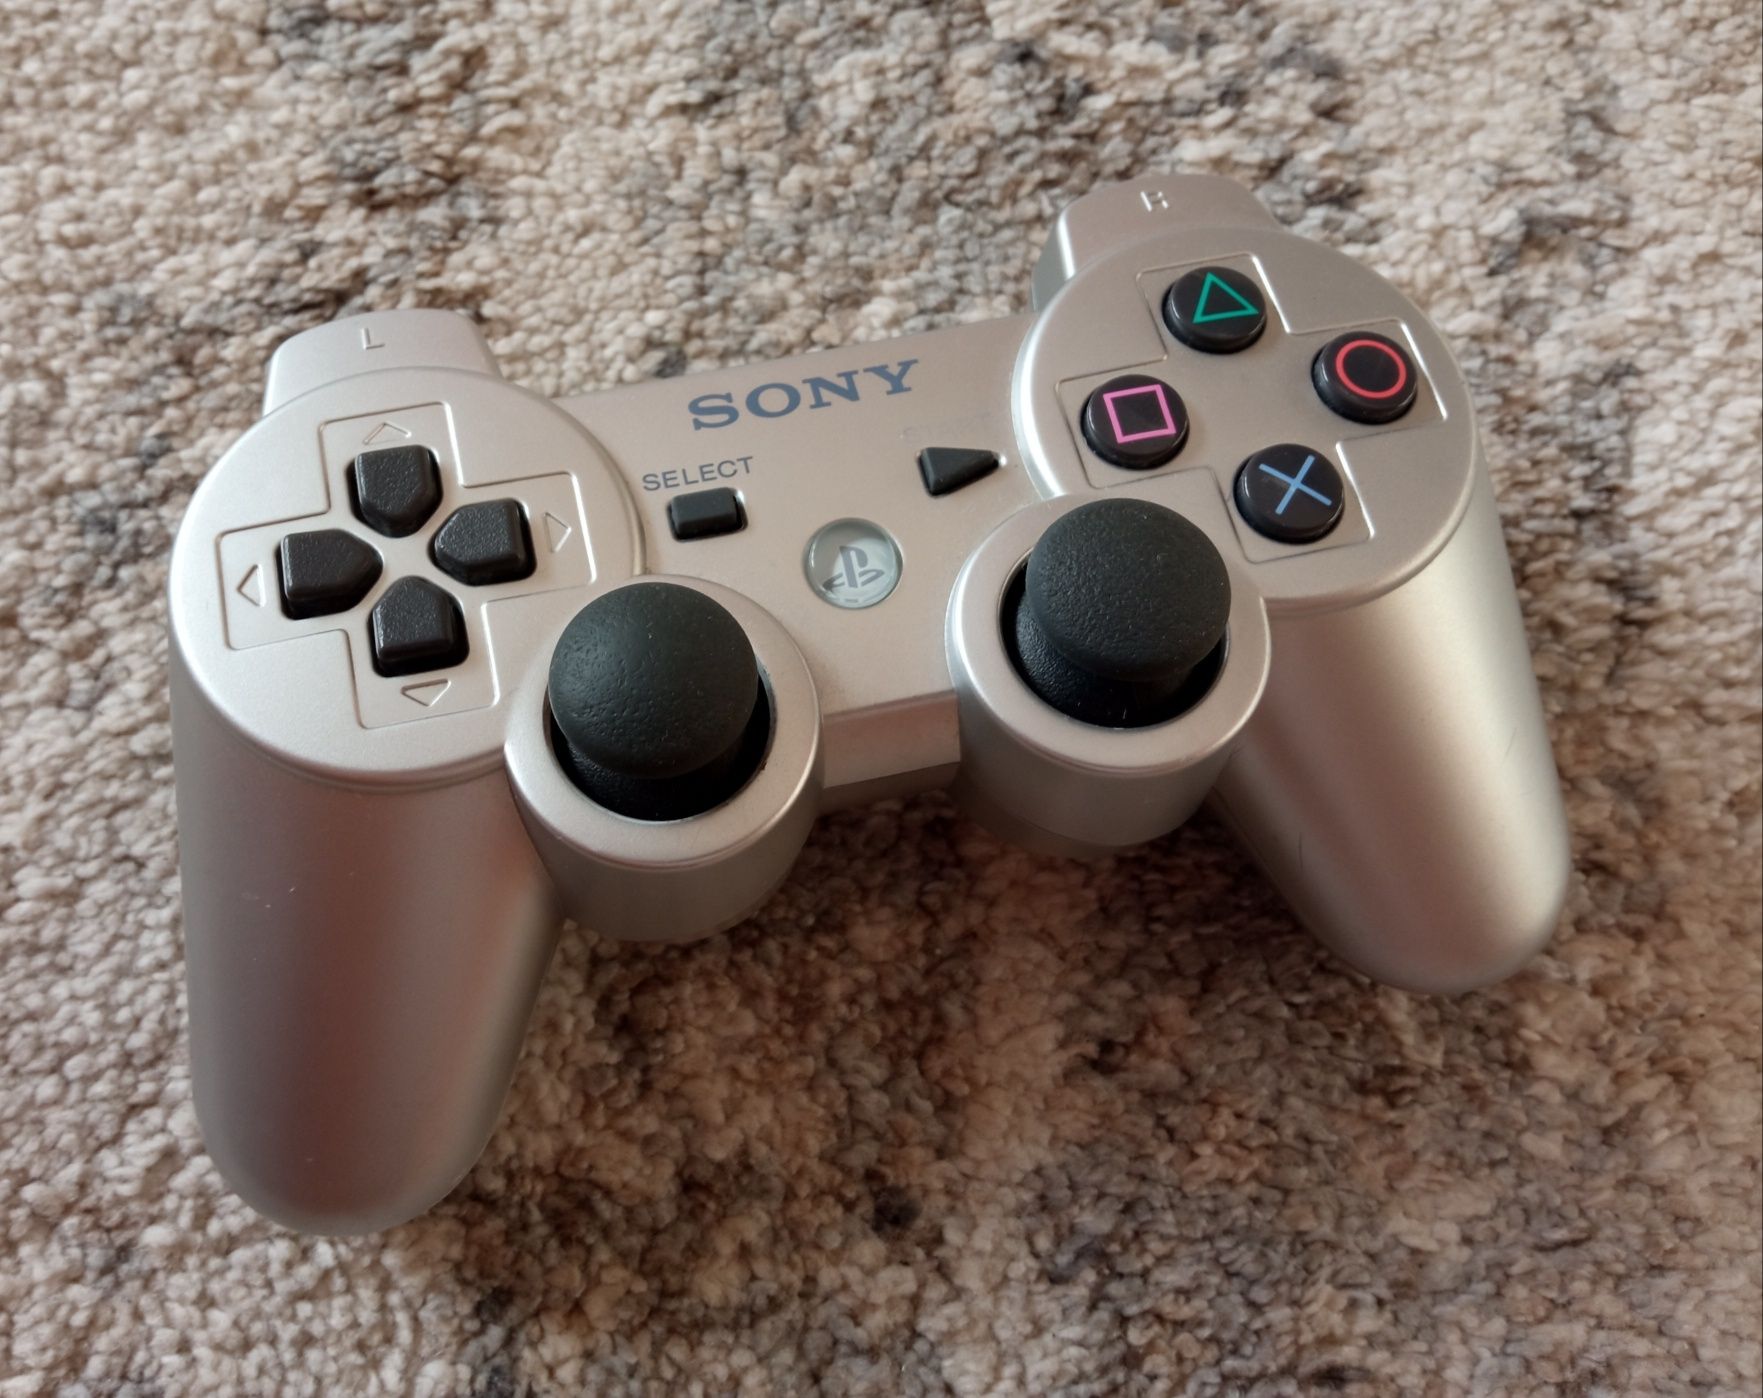 Oryginalny srebrny pad Sixaxis PlayStation 3